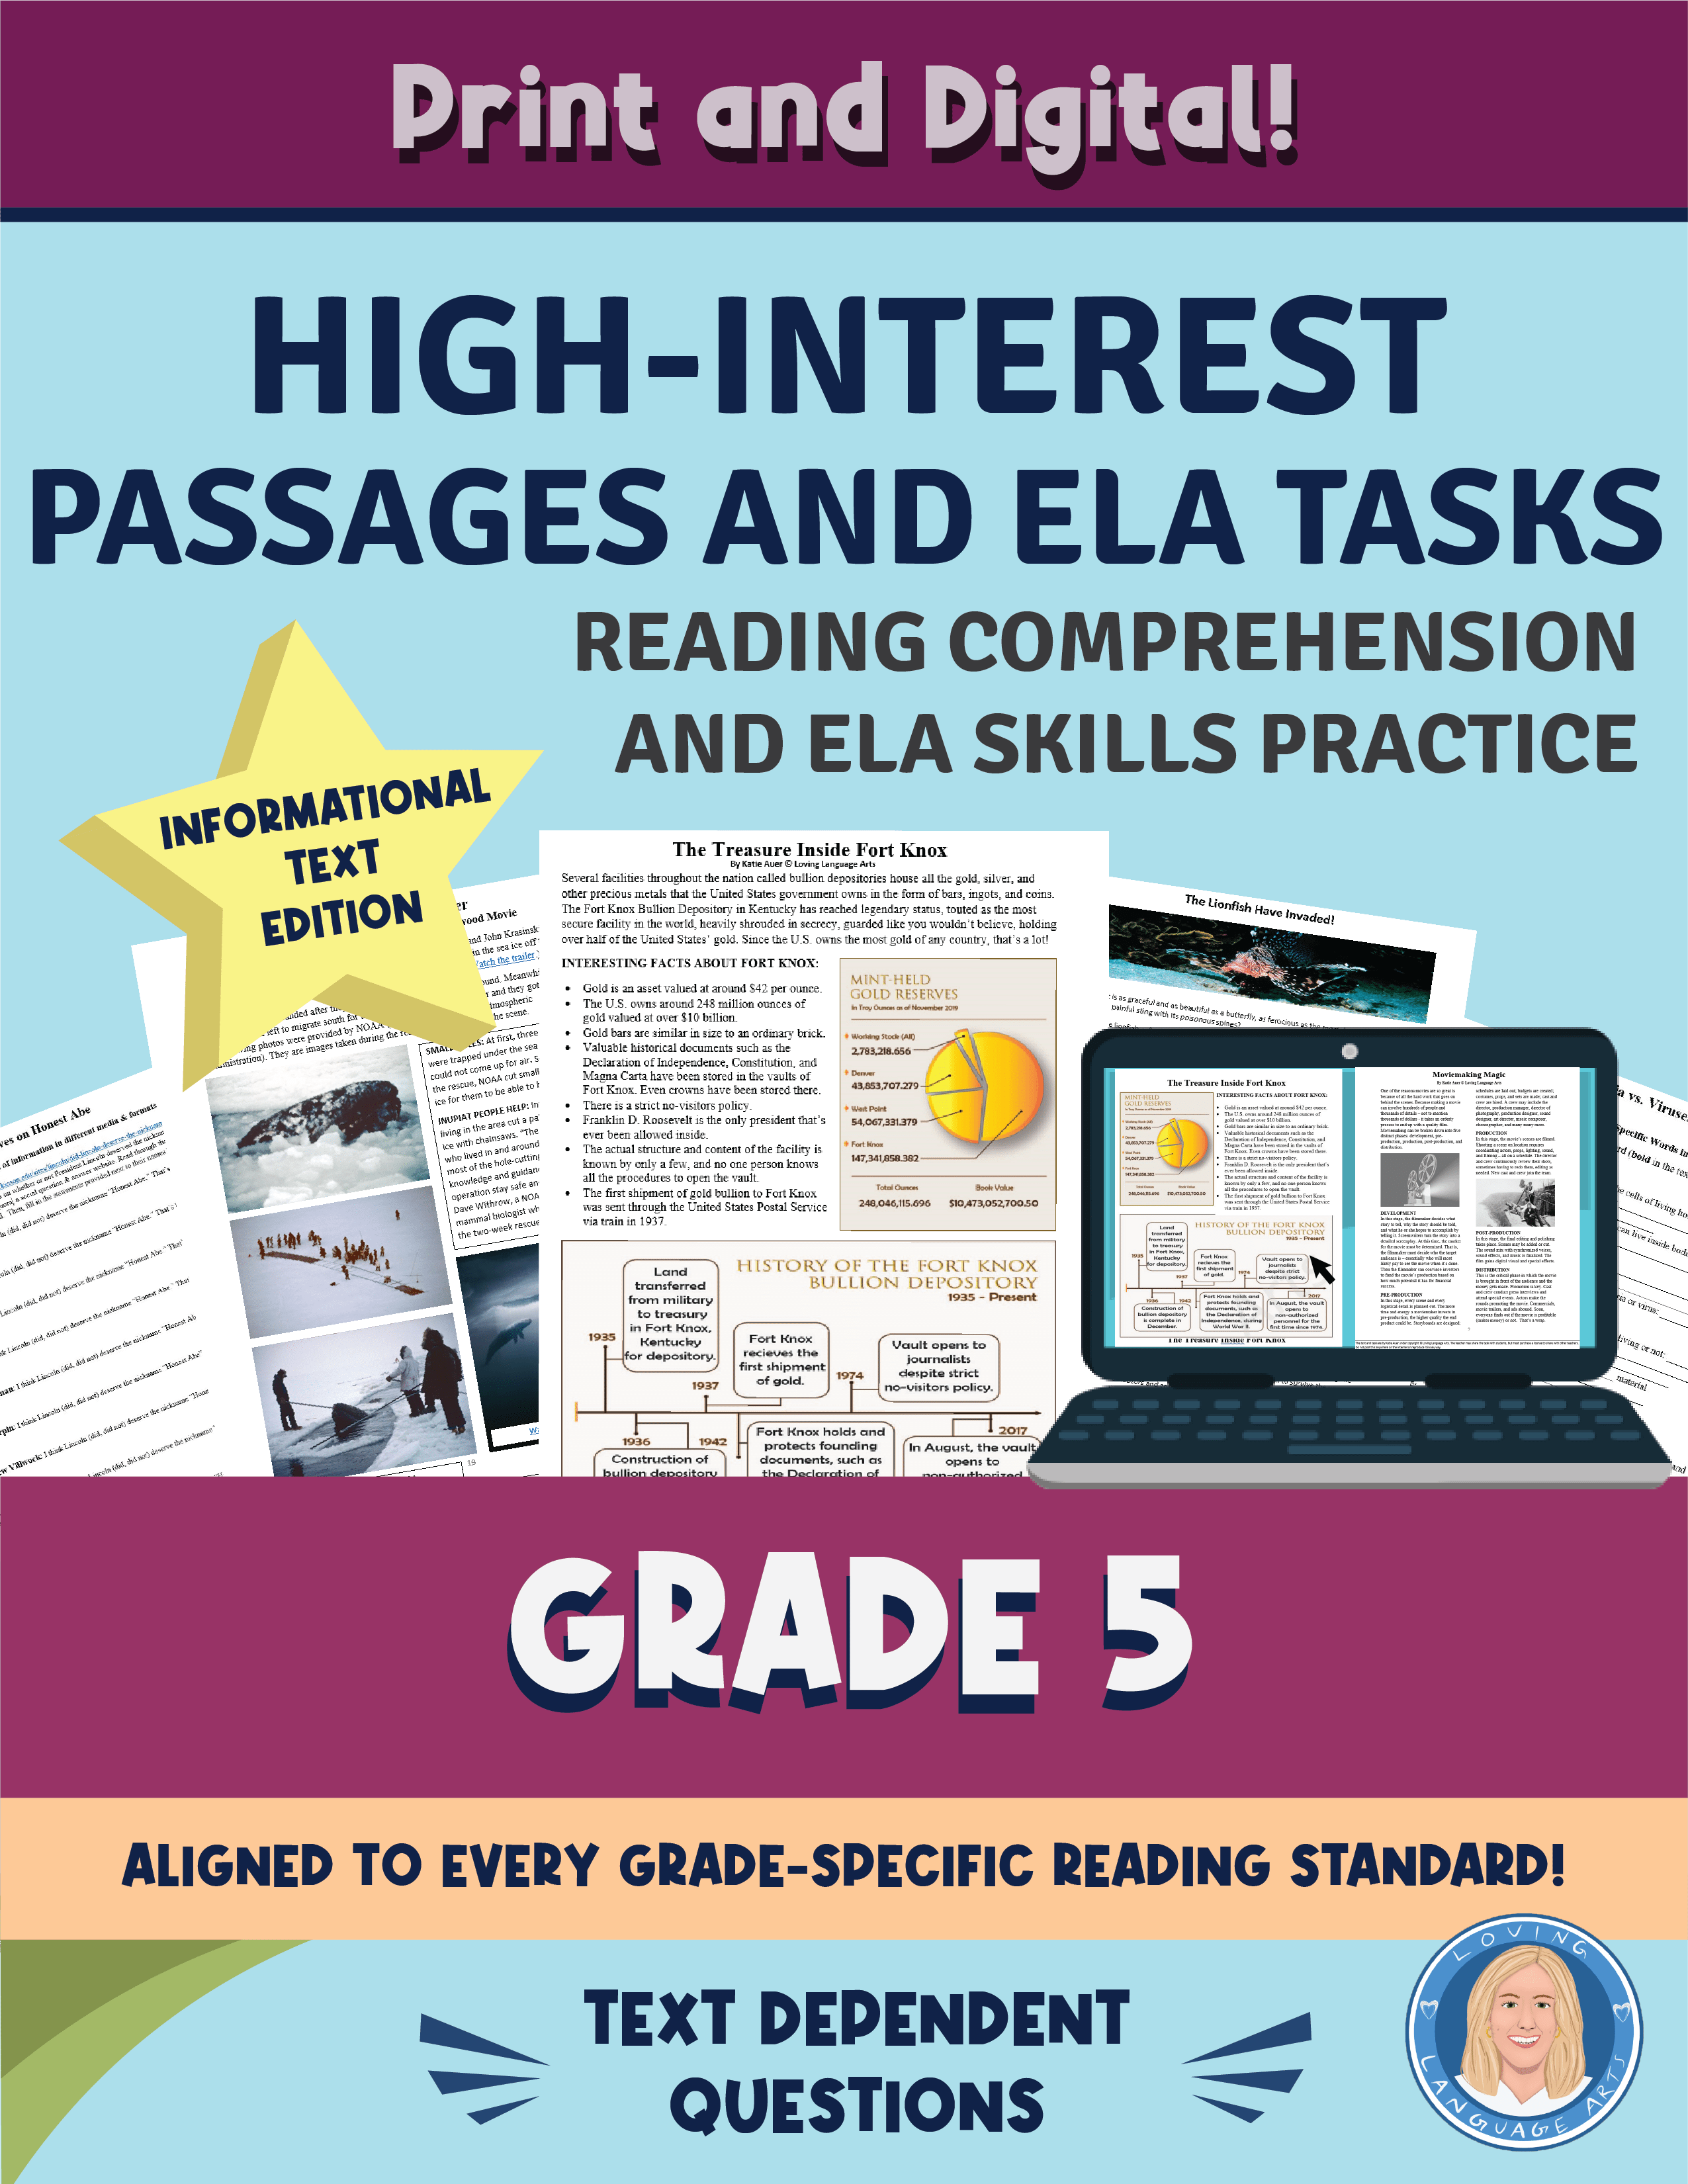 5th grade language arts workbook - High-interest passages and tasks.